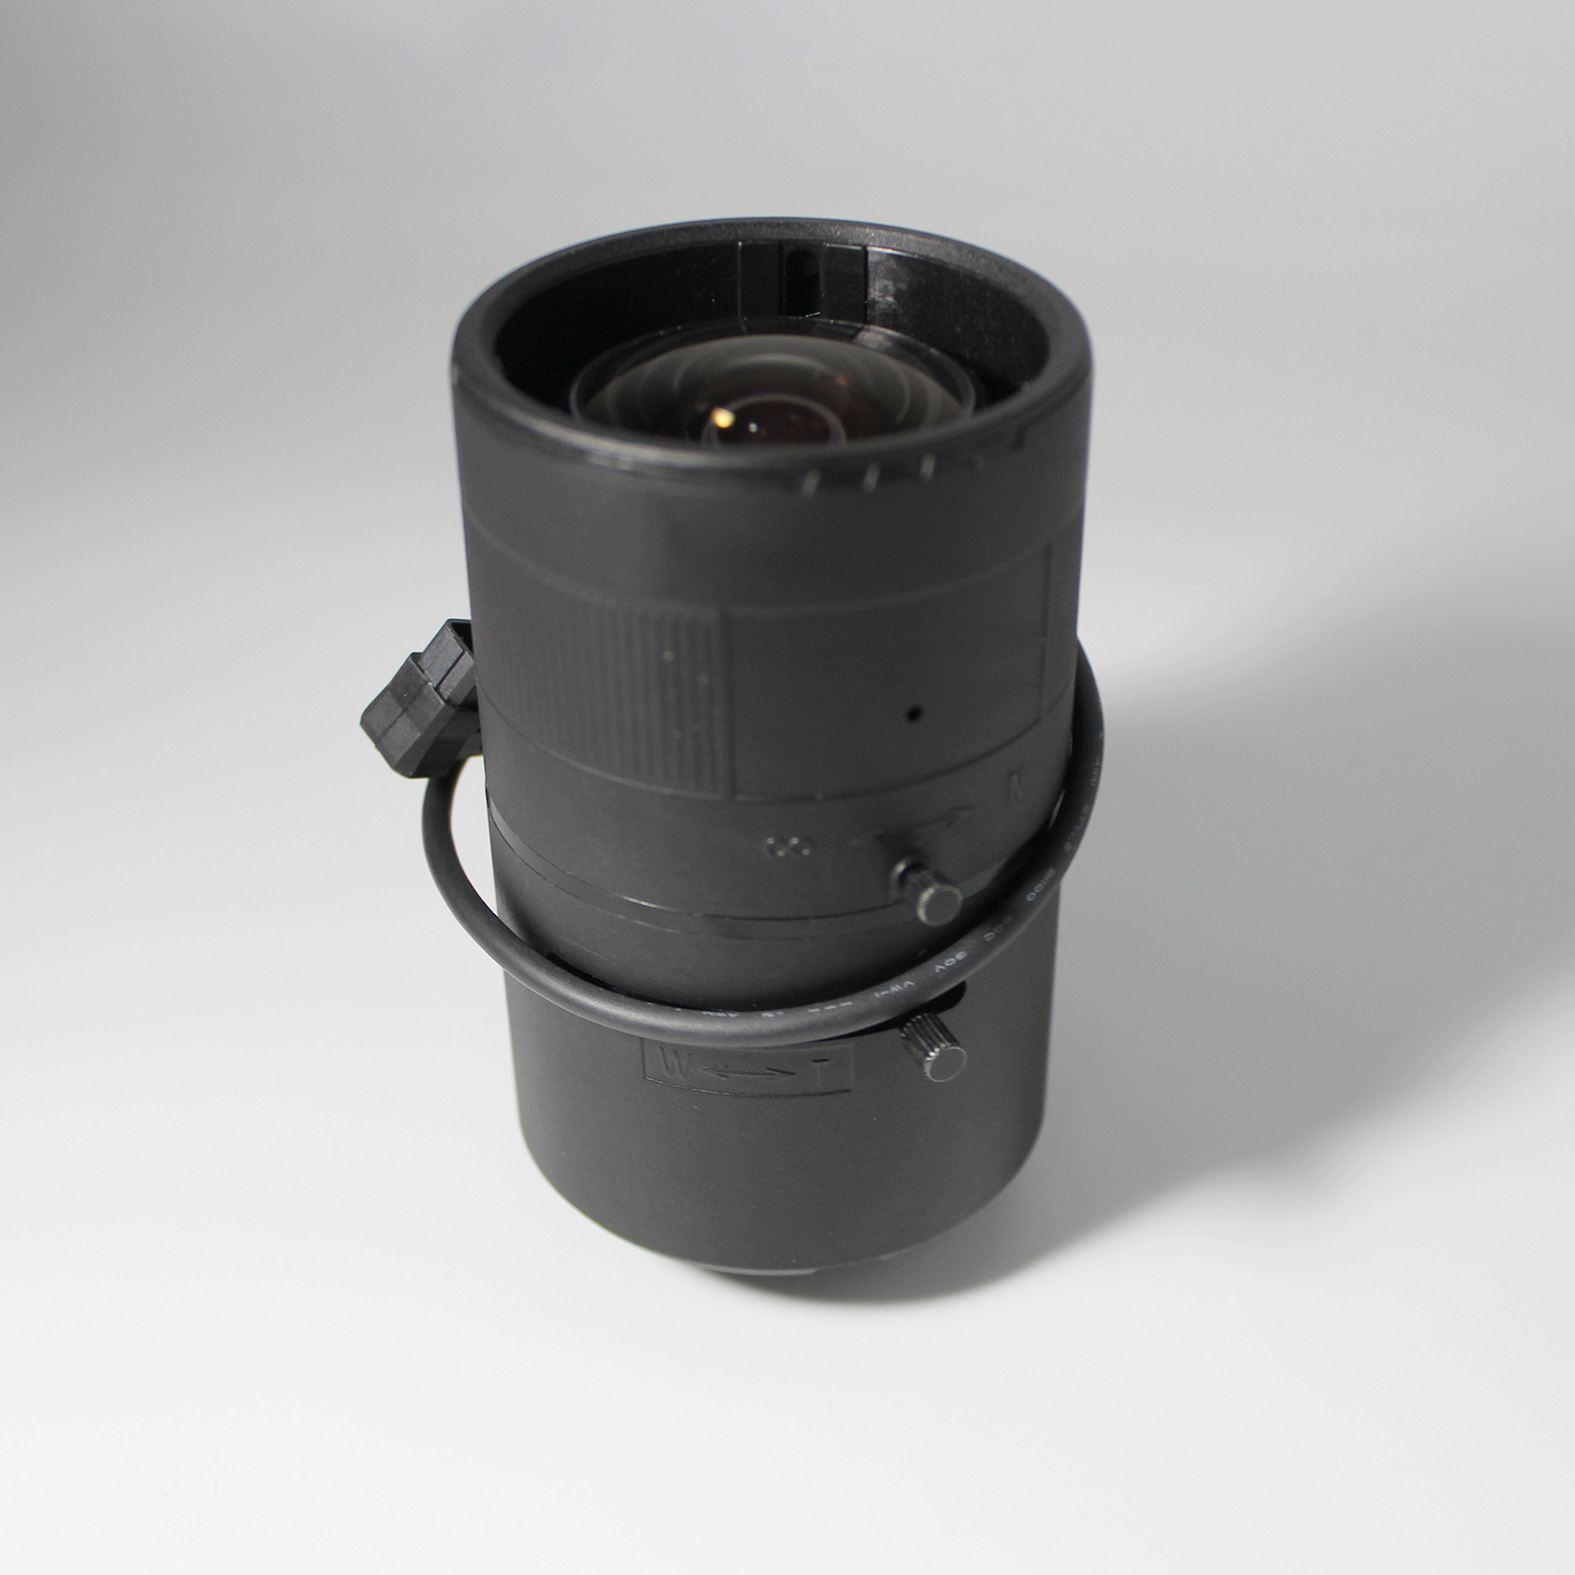 VY Optics Hotsale Camera Lens 3.8-17mm F1.4 M117VG38IR Tamron Lens